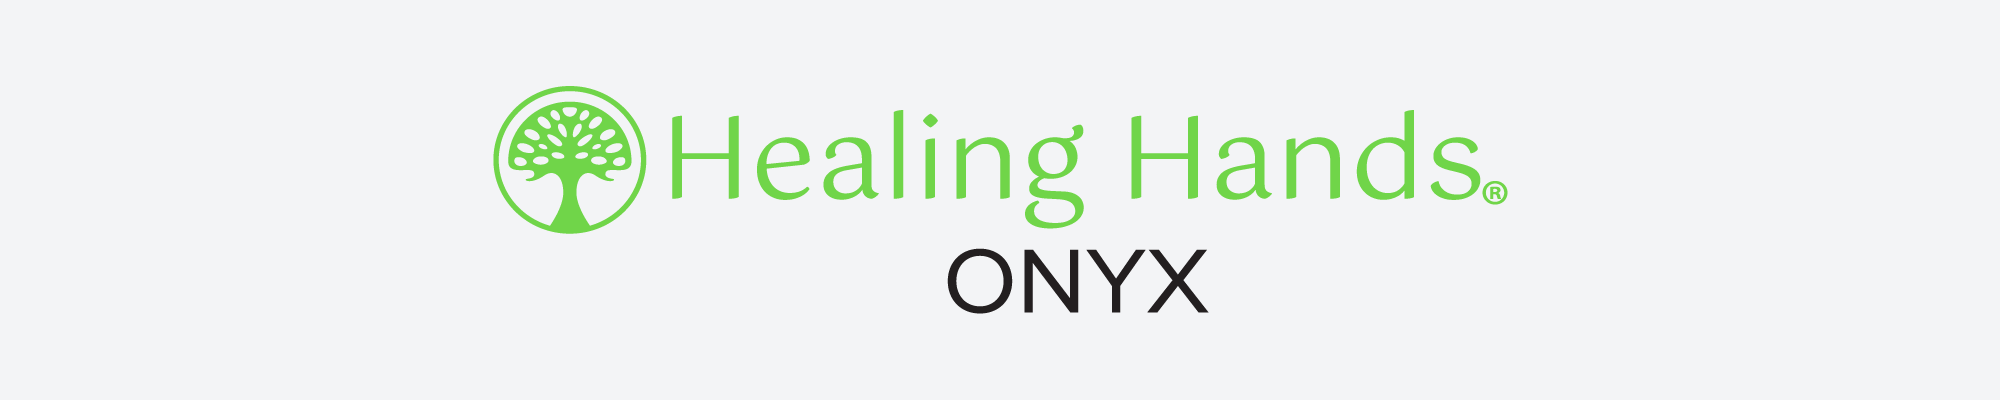 HH Onyx